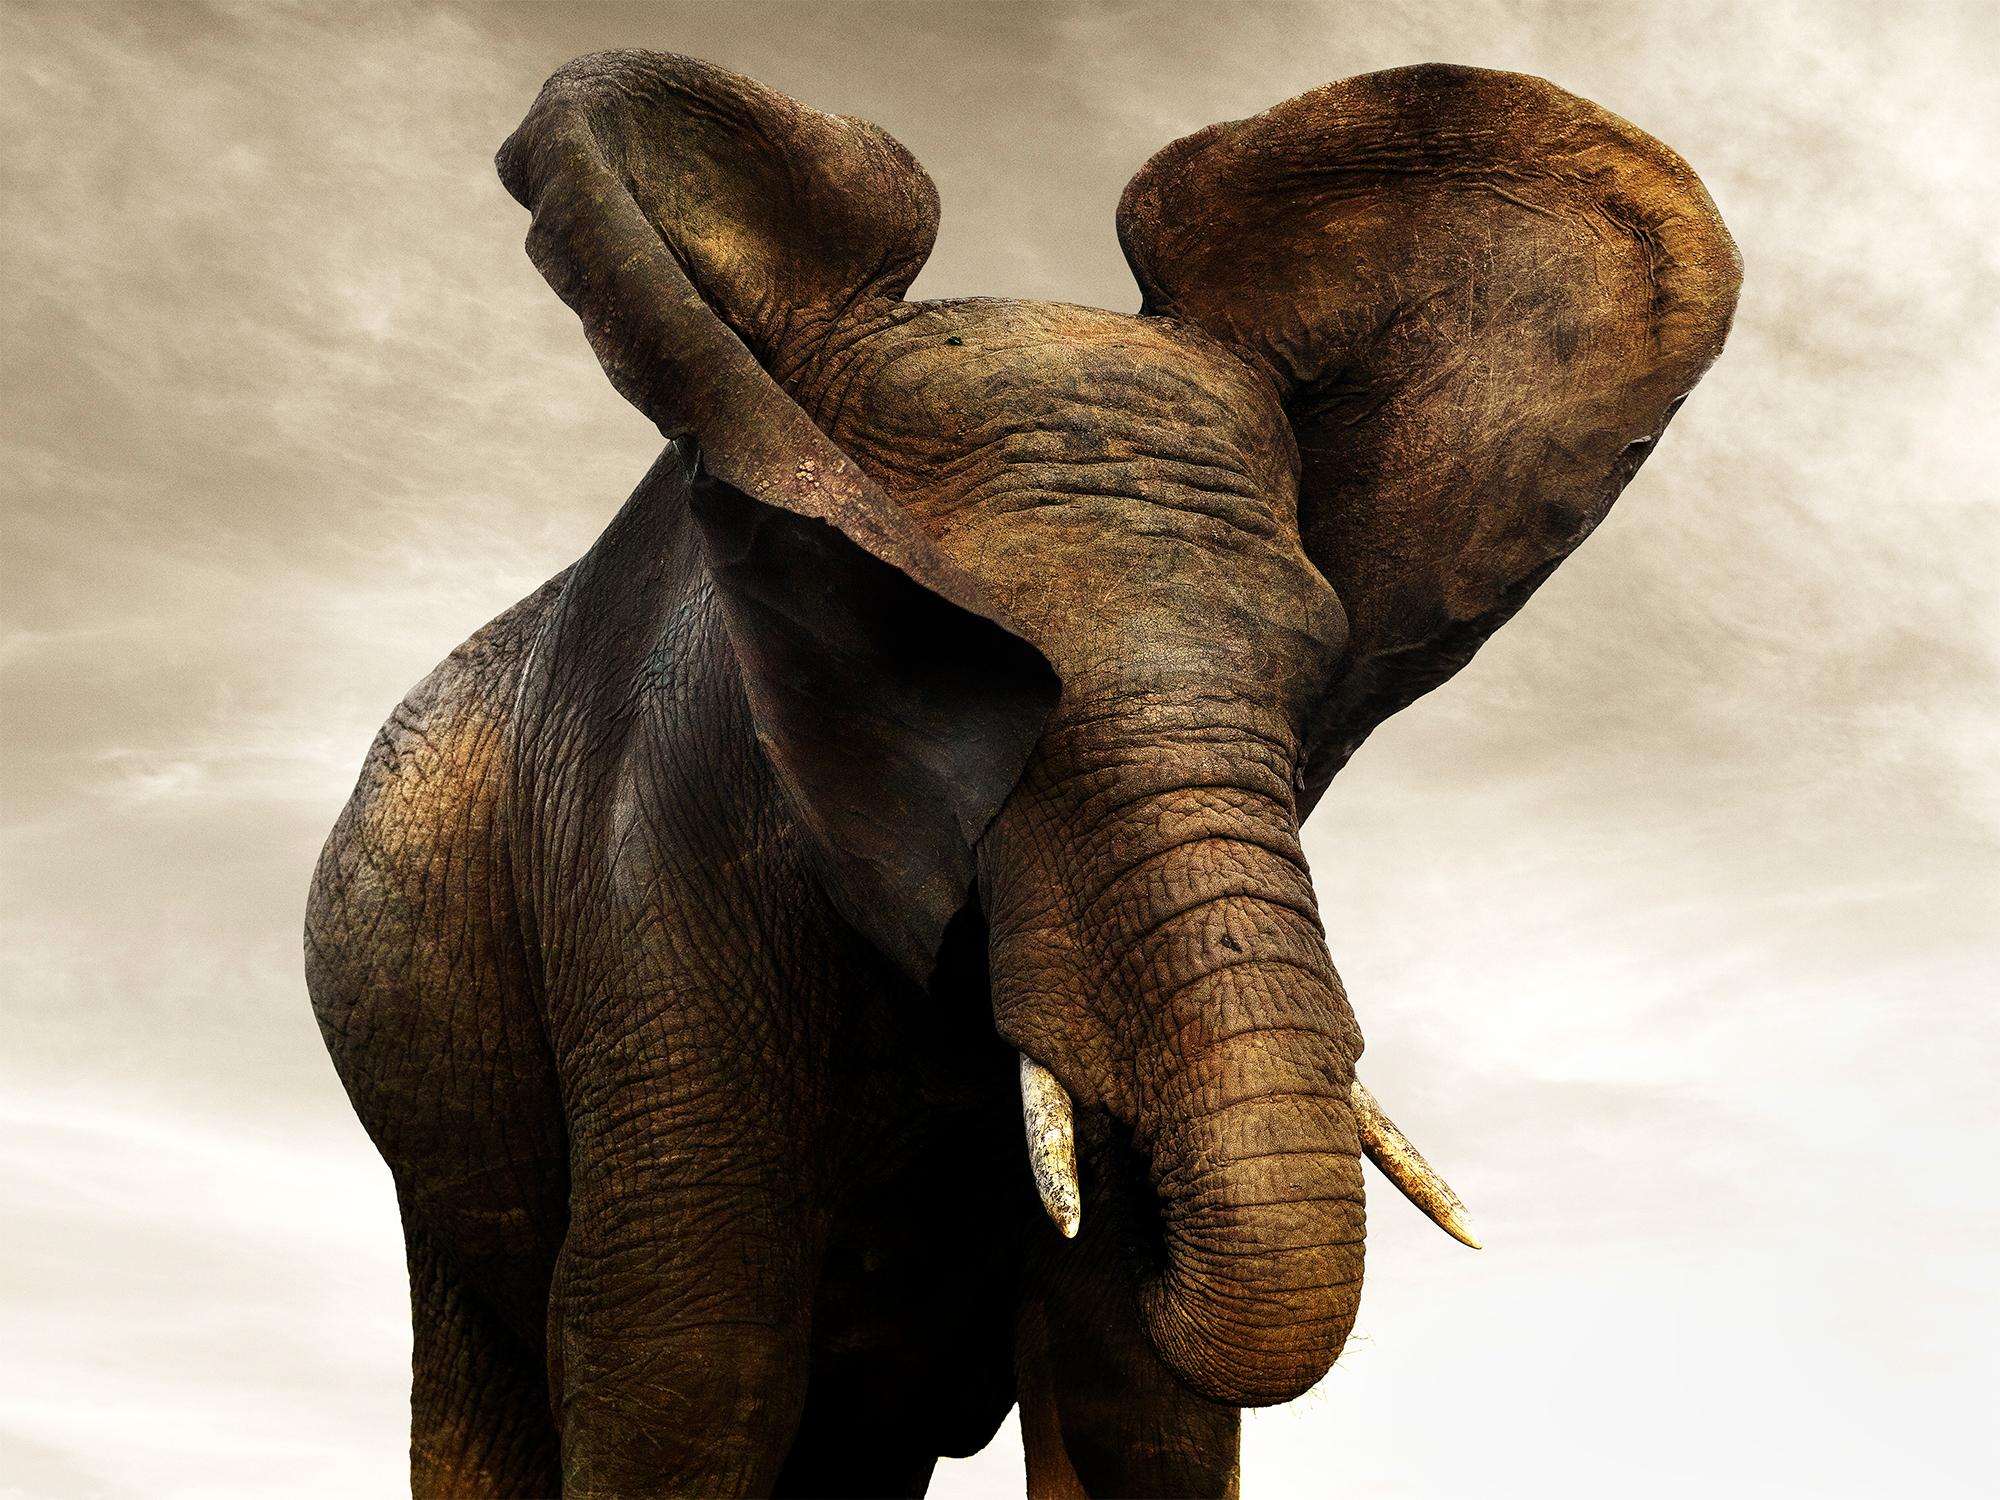 Joachim Schmeisser Portrait Photograph - Golden Giant I, animal, wildlife, black and white photography, elephant